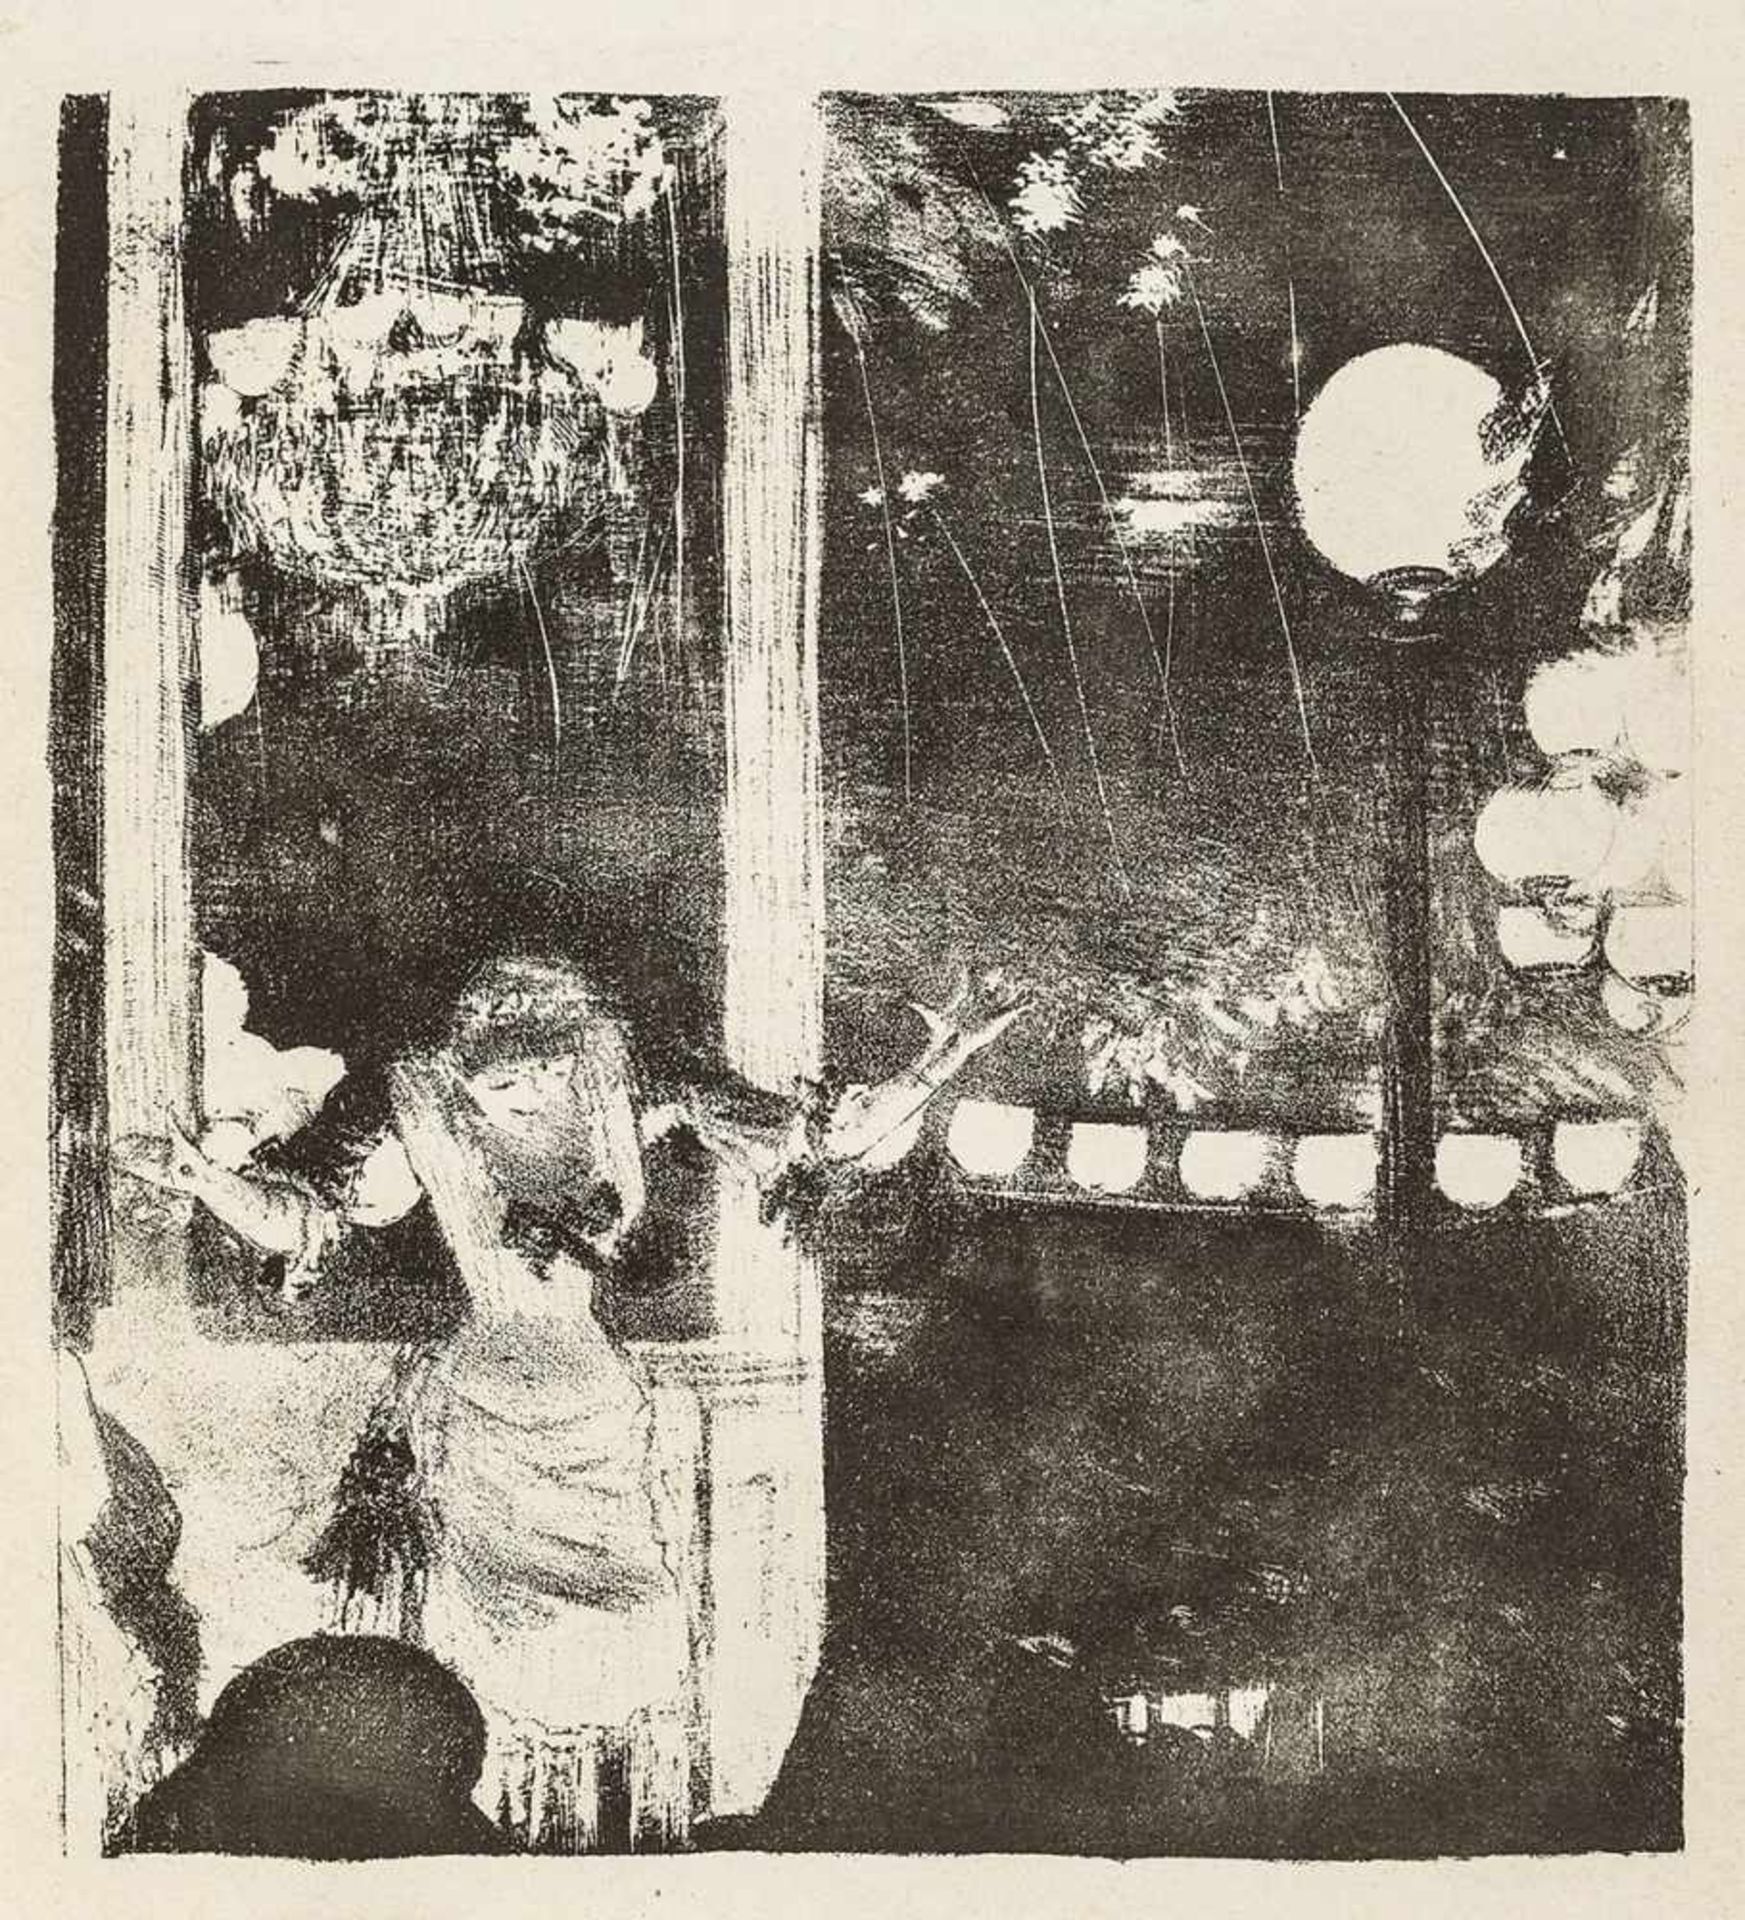 Degas. – P. Lafond. Degas. 2 Bde. der Luxusausgabe. Paris, Floury, 1918-19. 157 u. 75 num. S. mit